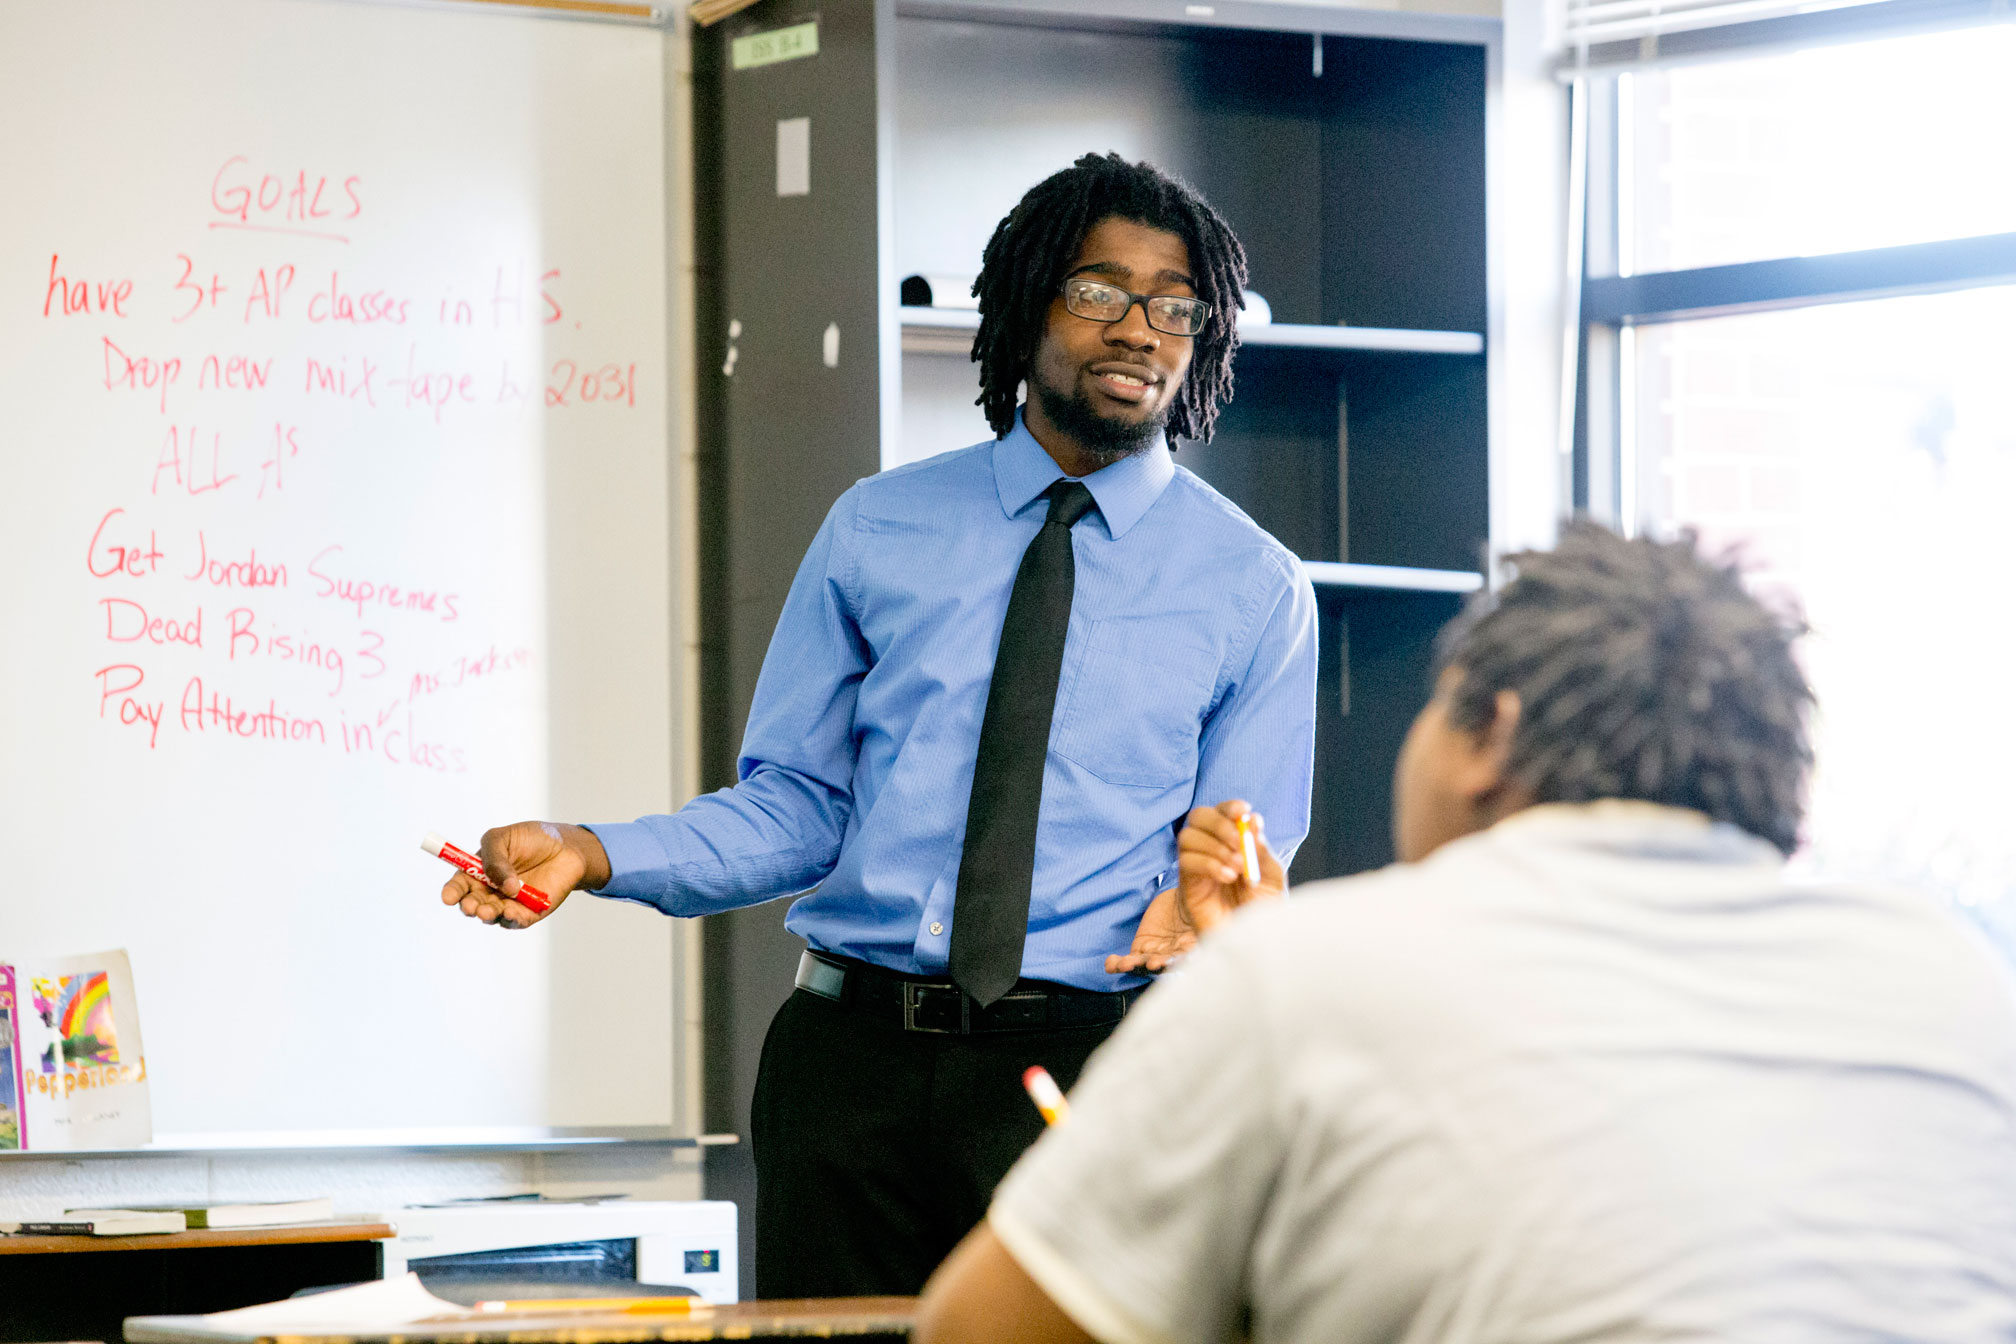 MANSUR’S MANIFESTO: HOW AN ASPIRING BLACK MALE TEACHER PLANS TO TURN TEACHING INTO ...2016 x 1344